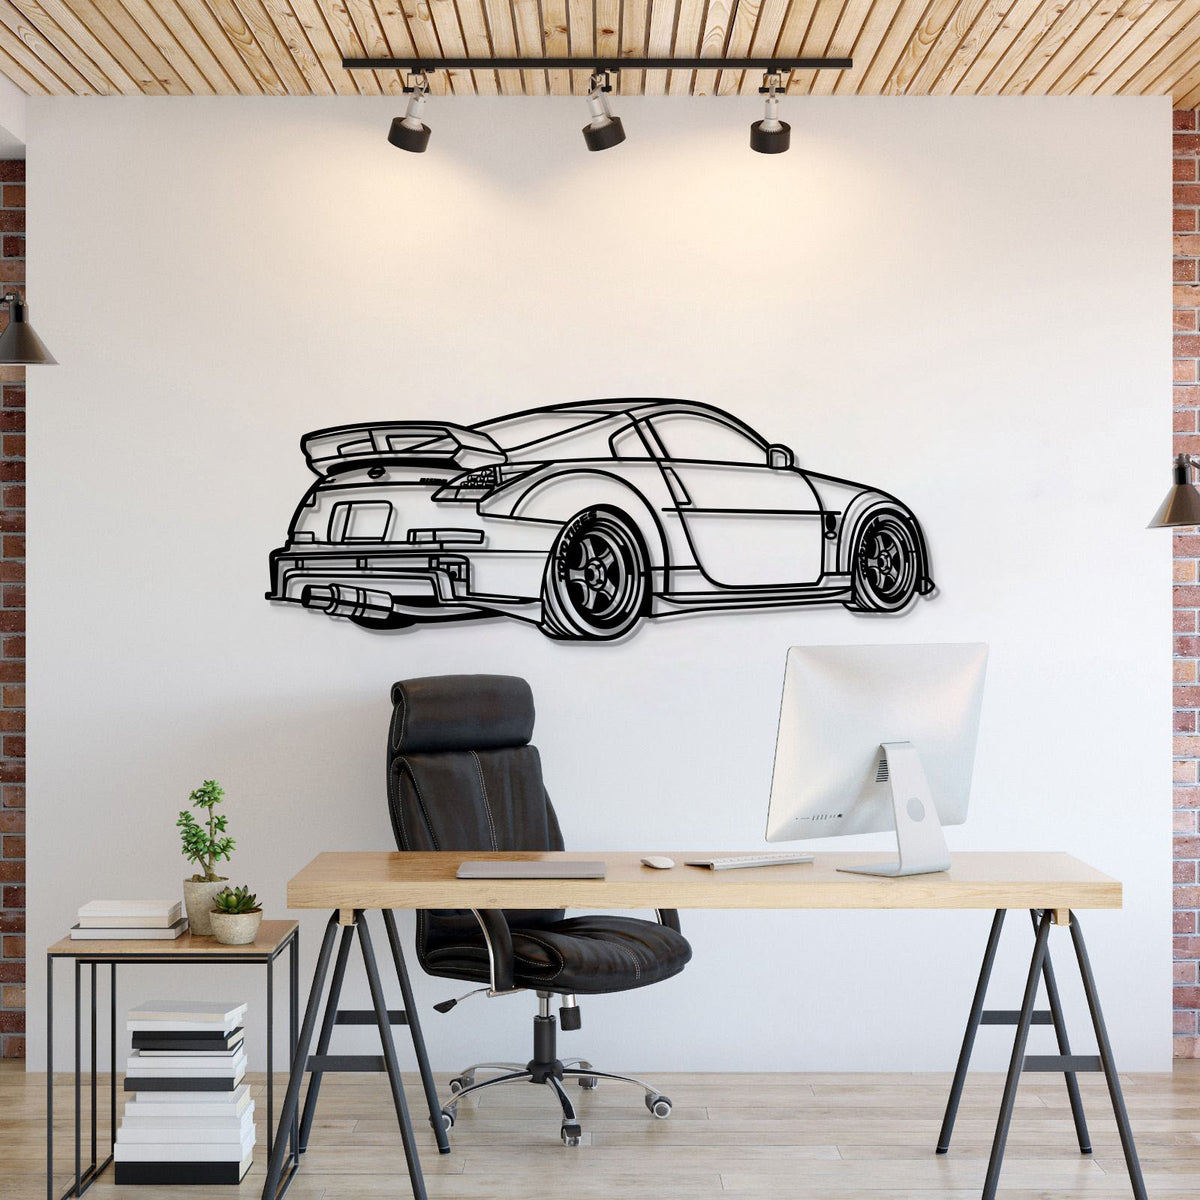 350z Custom Perspective Metal Car Wall Art - MT1178